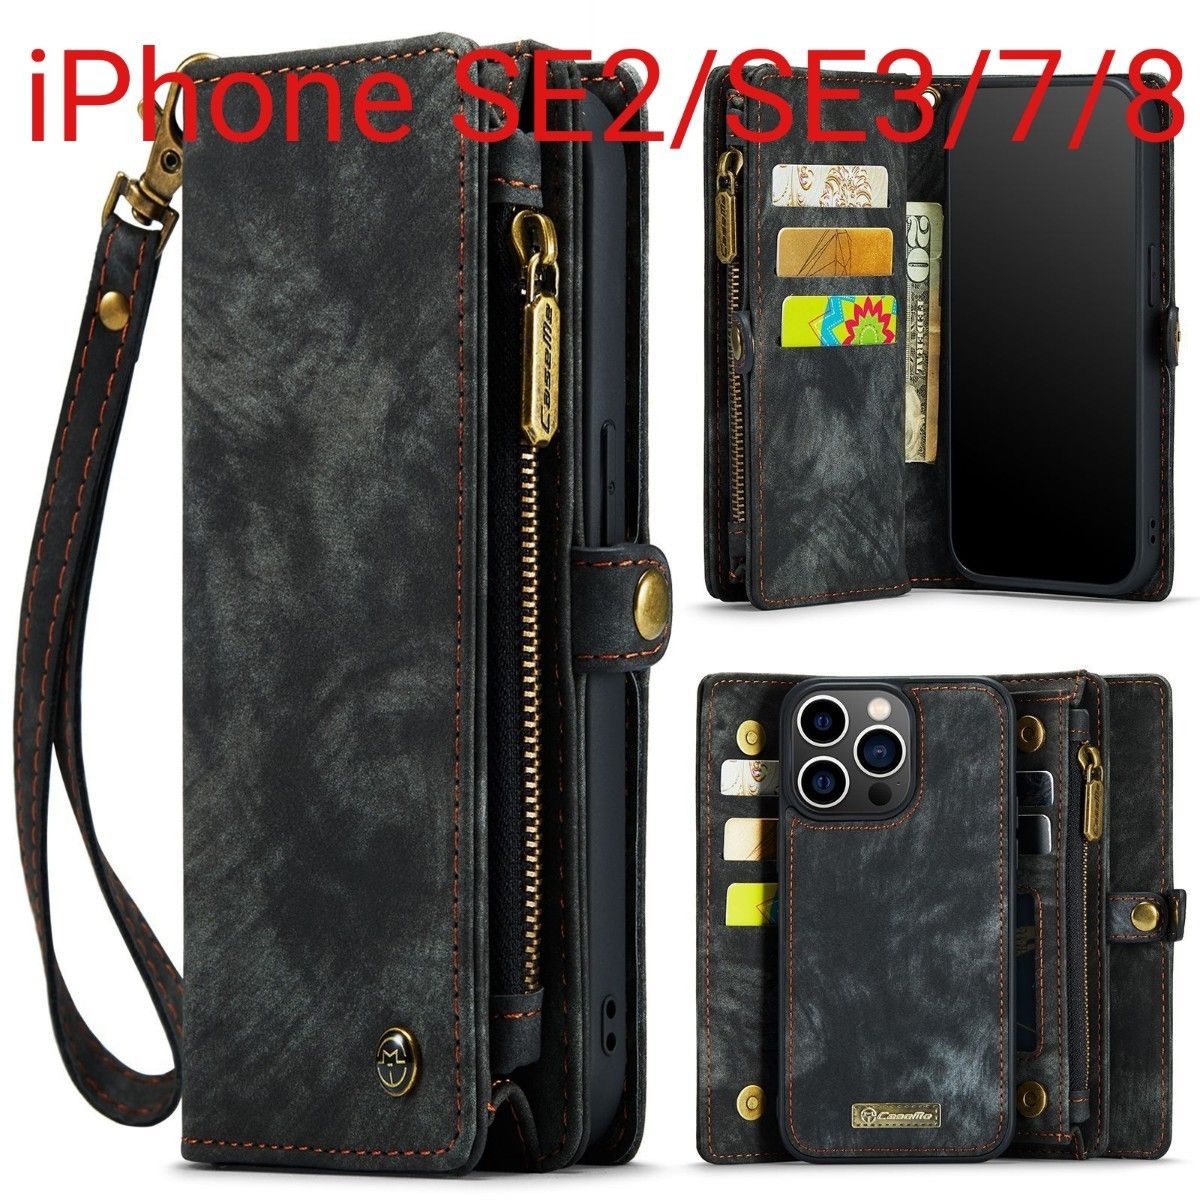 iPhone SE2第2世代SE3第3世代スマホケース & 財布/携帯バッグ手帳/グレー系ブラック黒